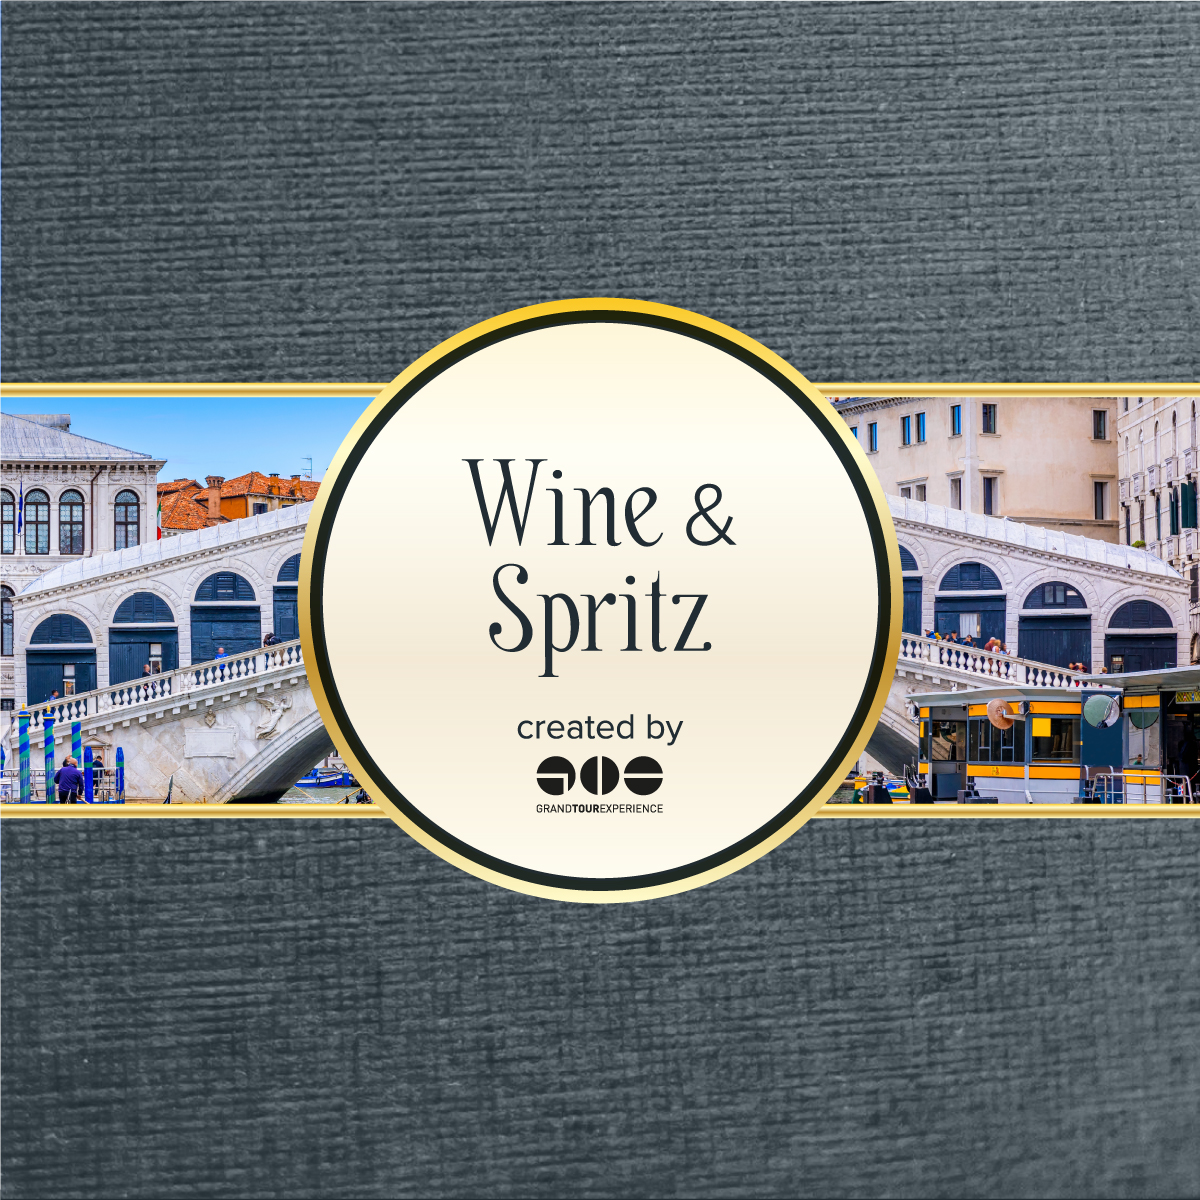 Wine&Spritz Tour: Tasting & Hidden Gems of Venice